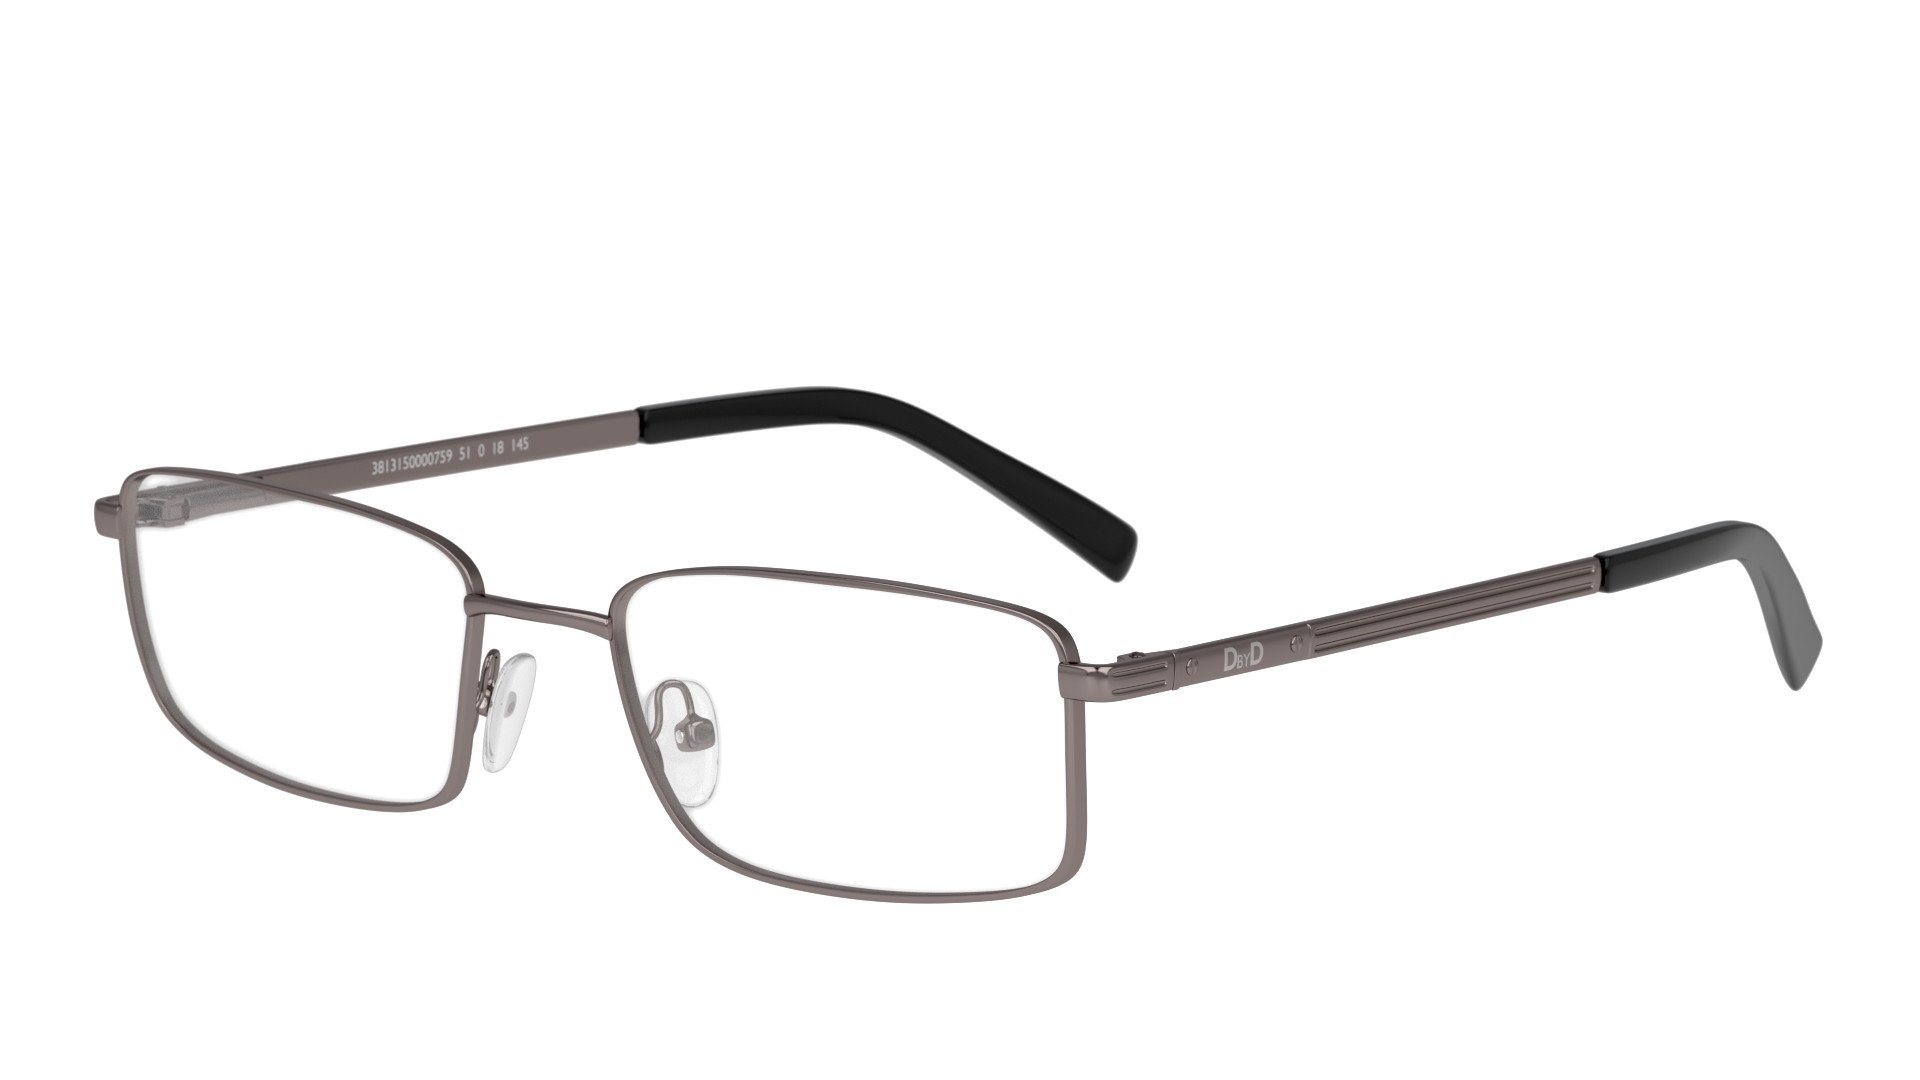 Angle_Left01 DbyD DB H11 (C02) Glasses Transparent / Grey